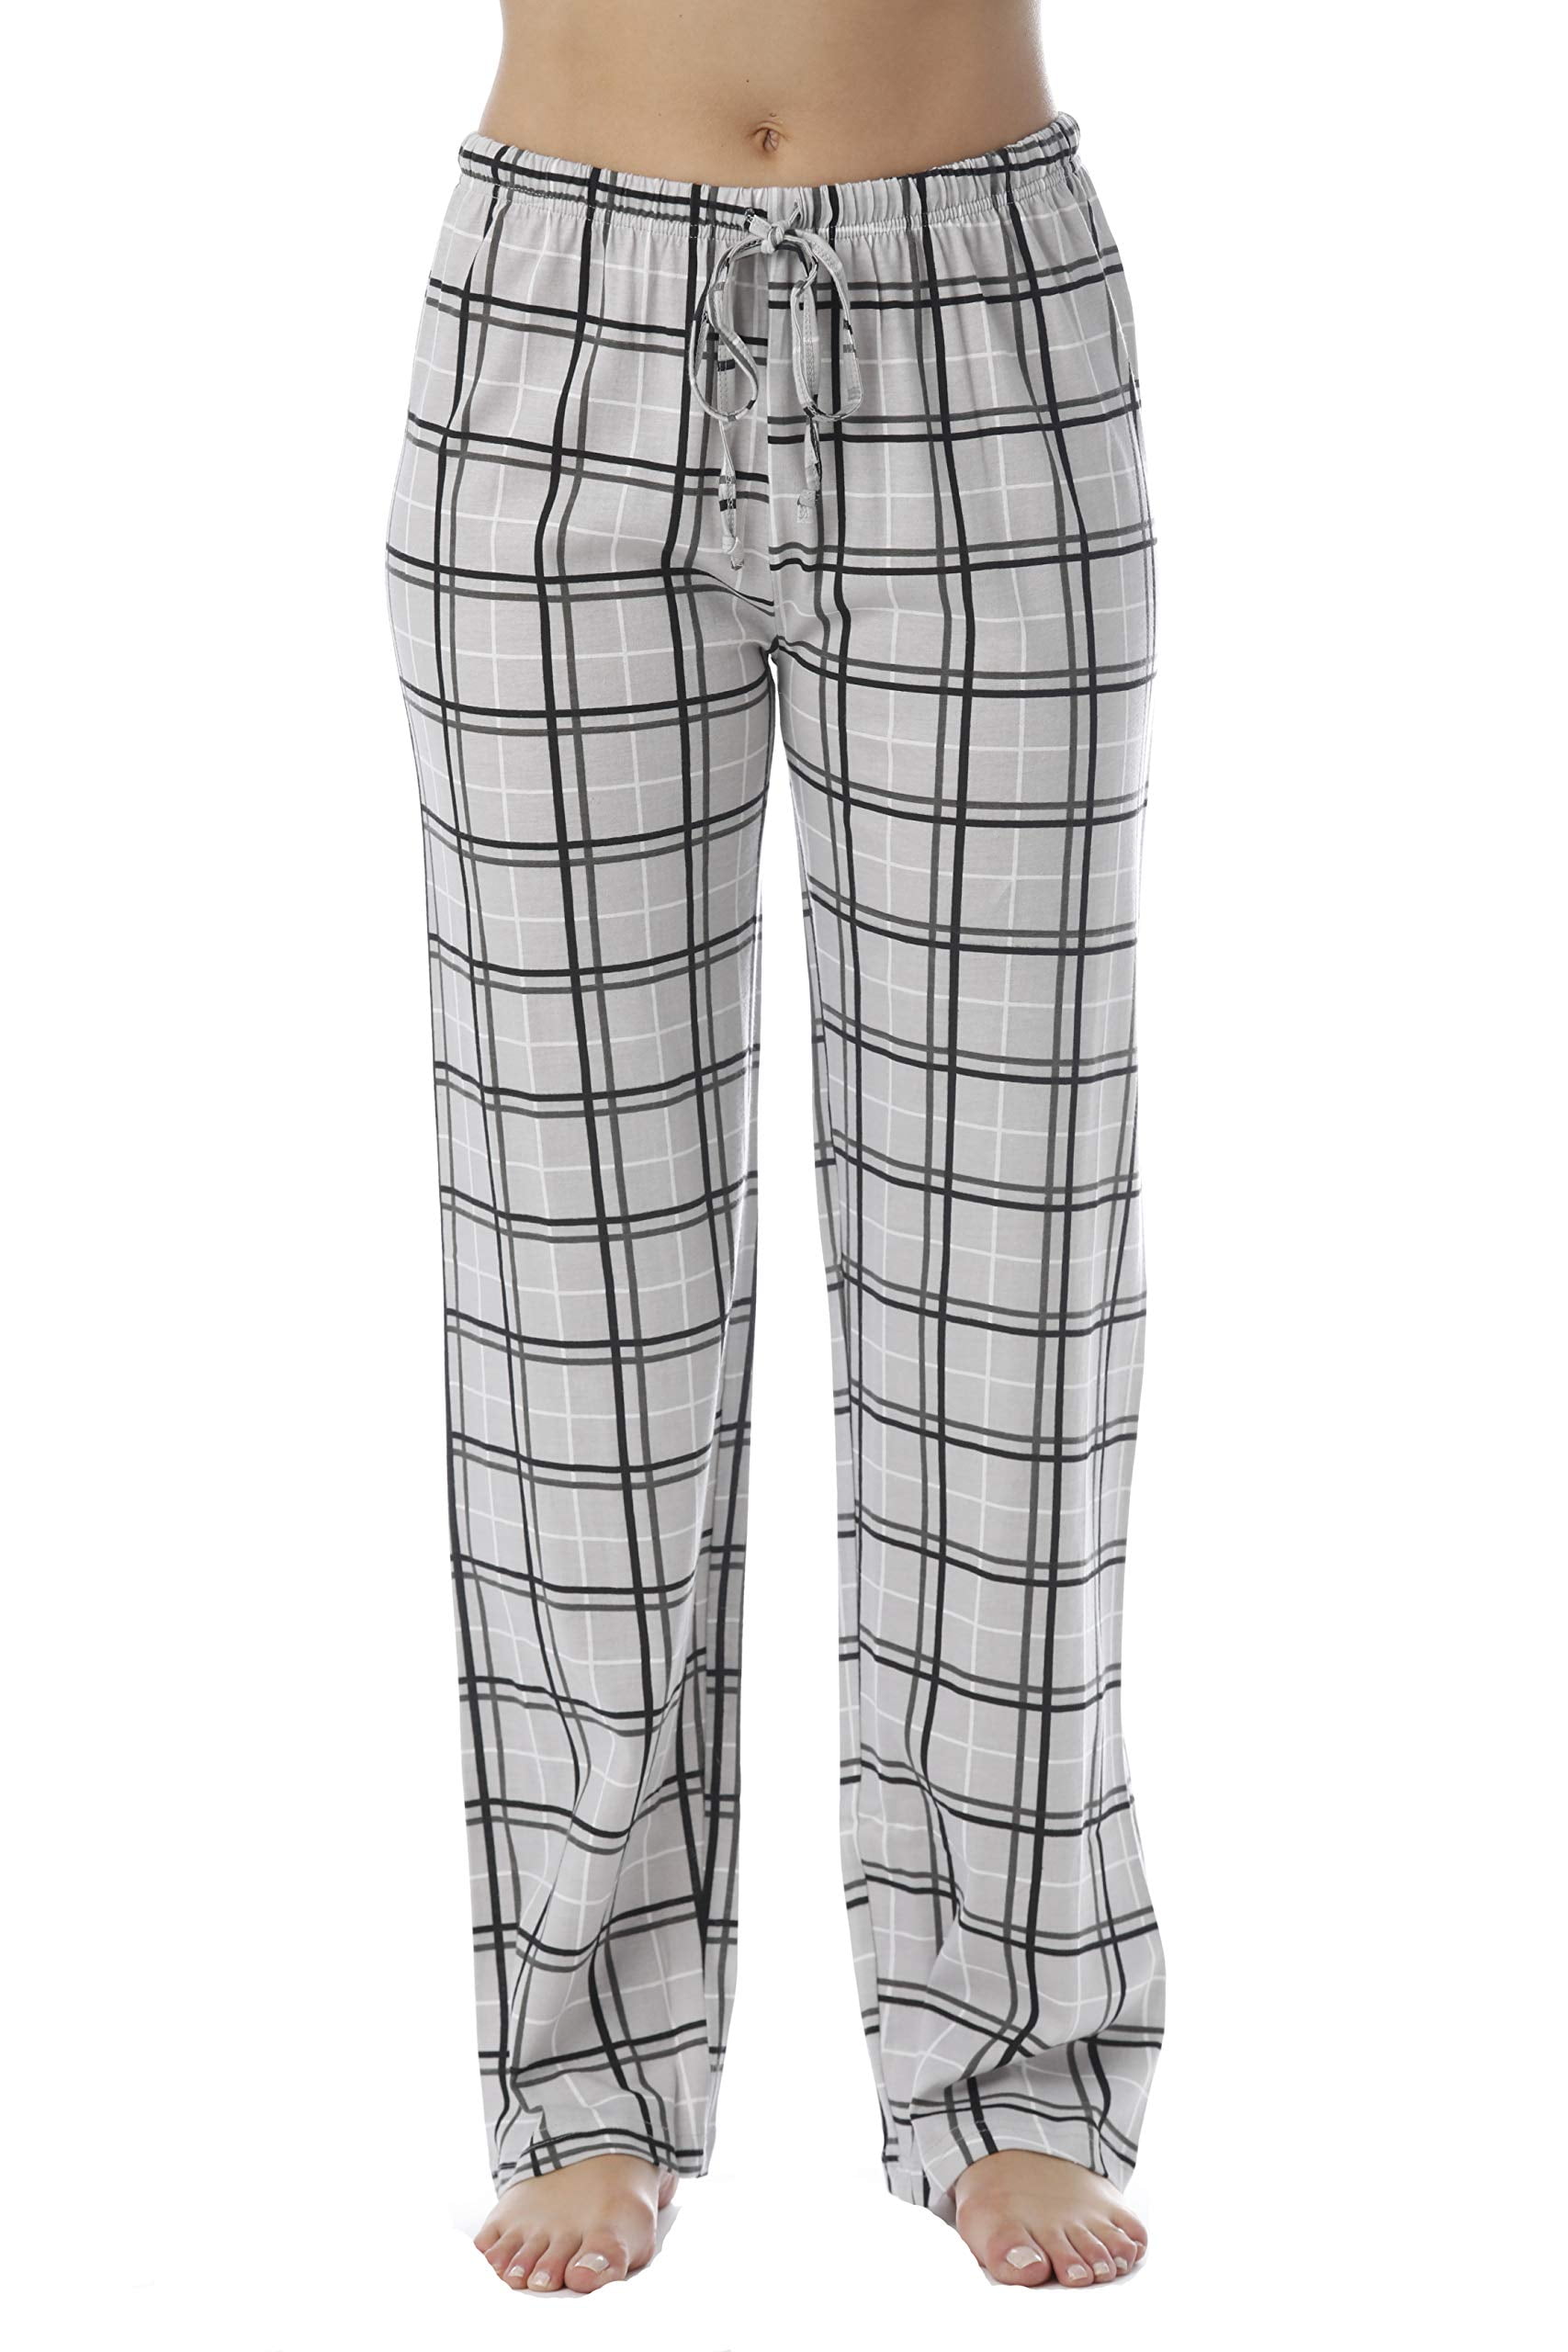 Plaaee Women's Plush Pajama Pants Hearts for Valentine's Day Sleep